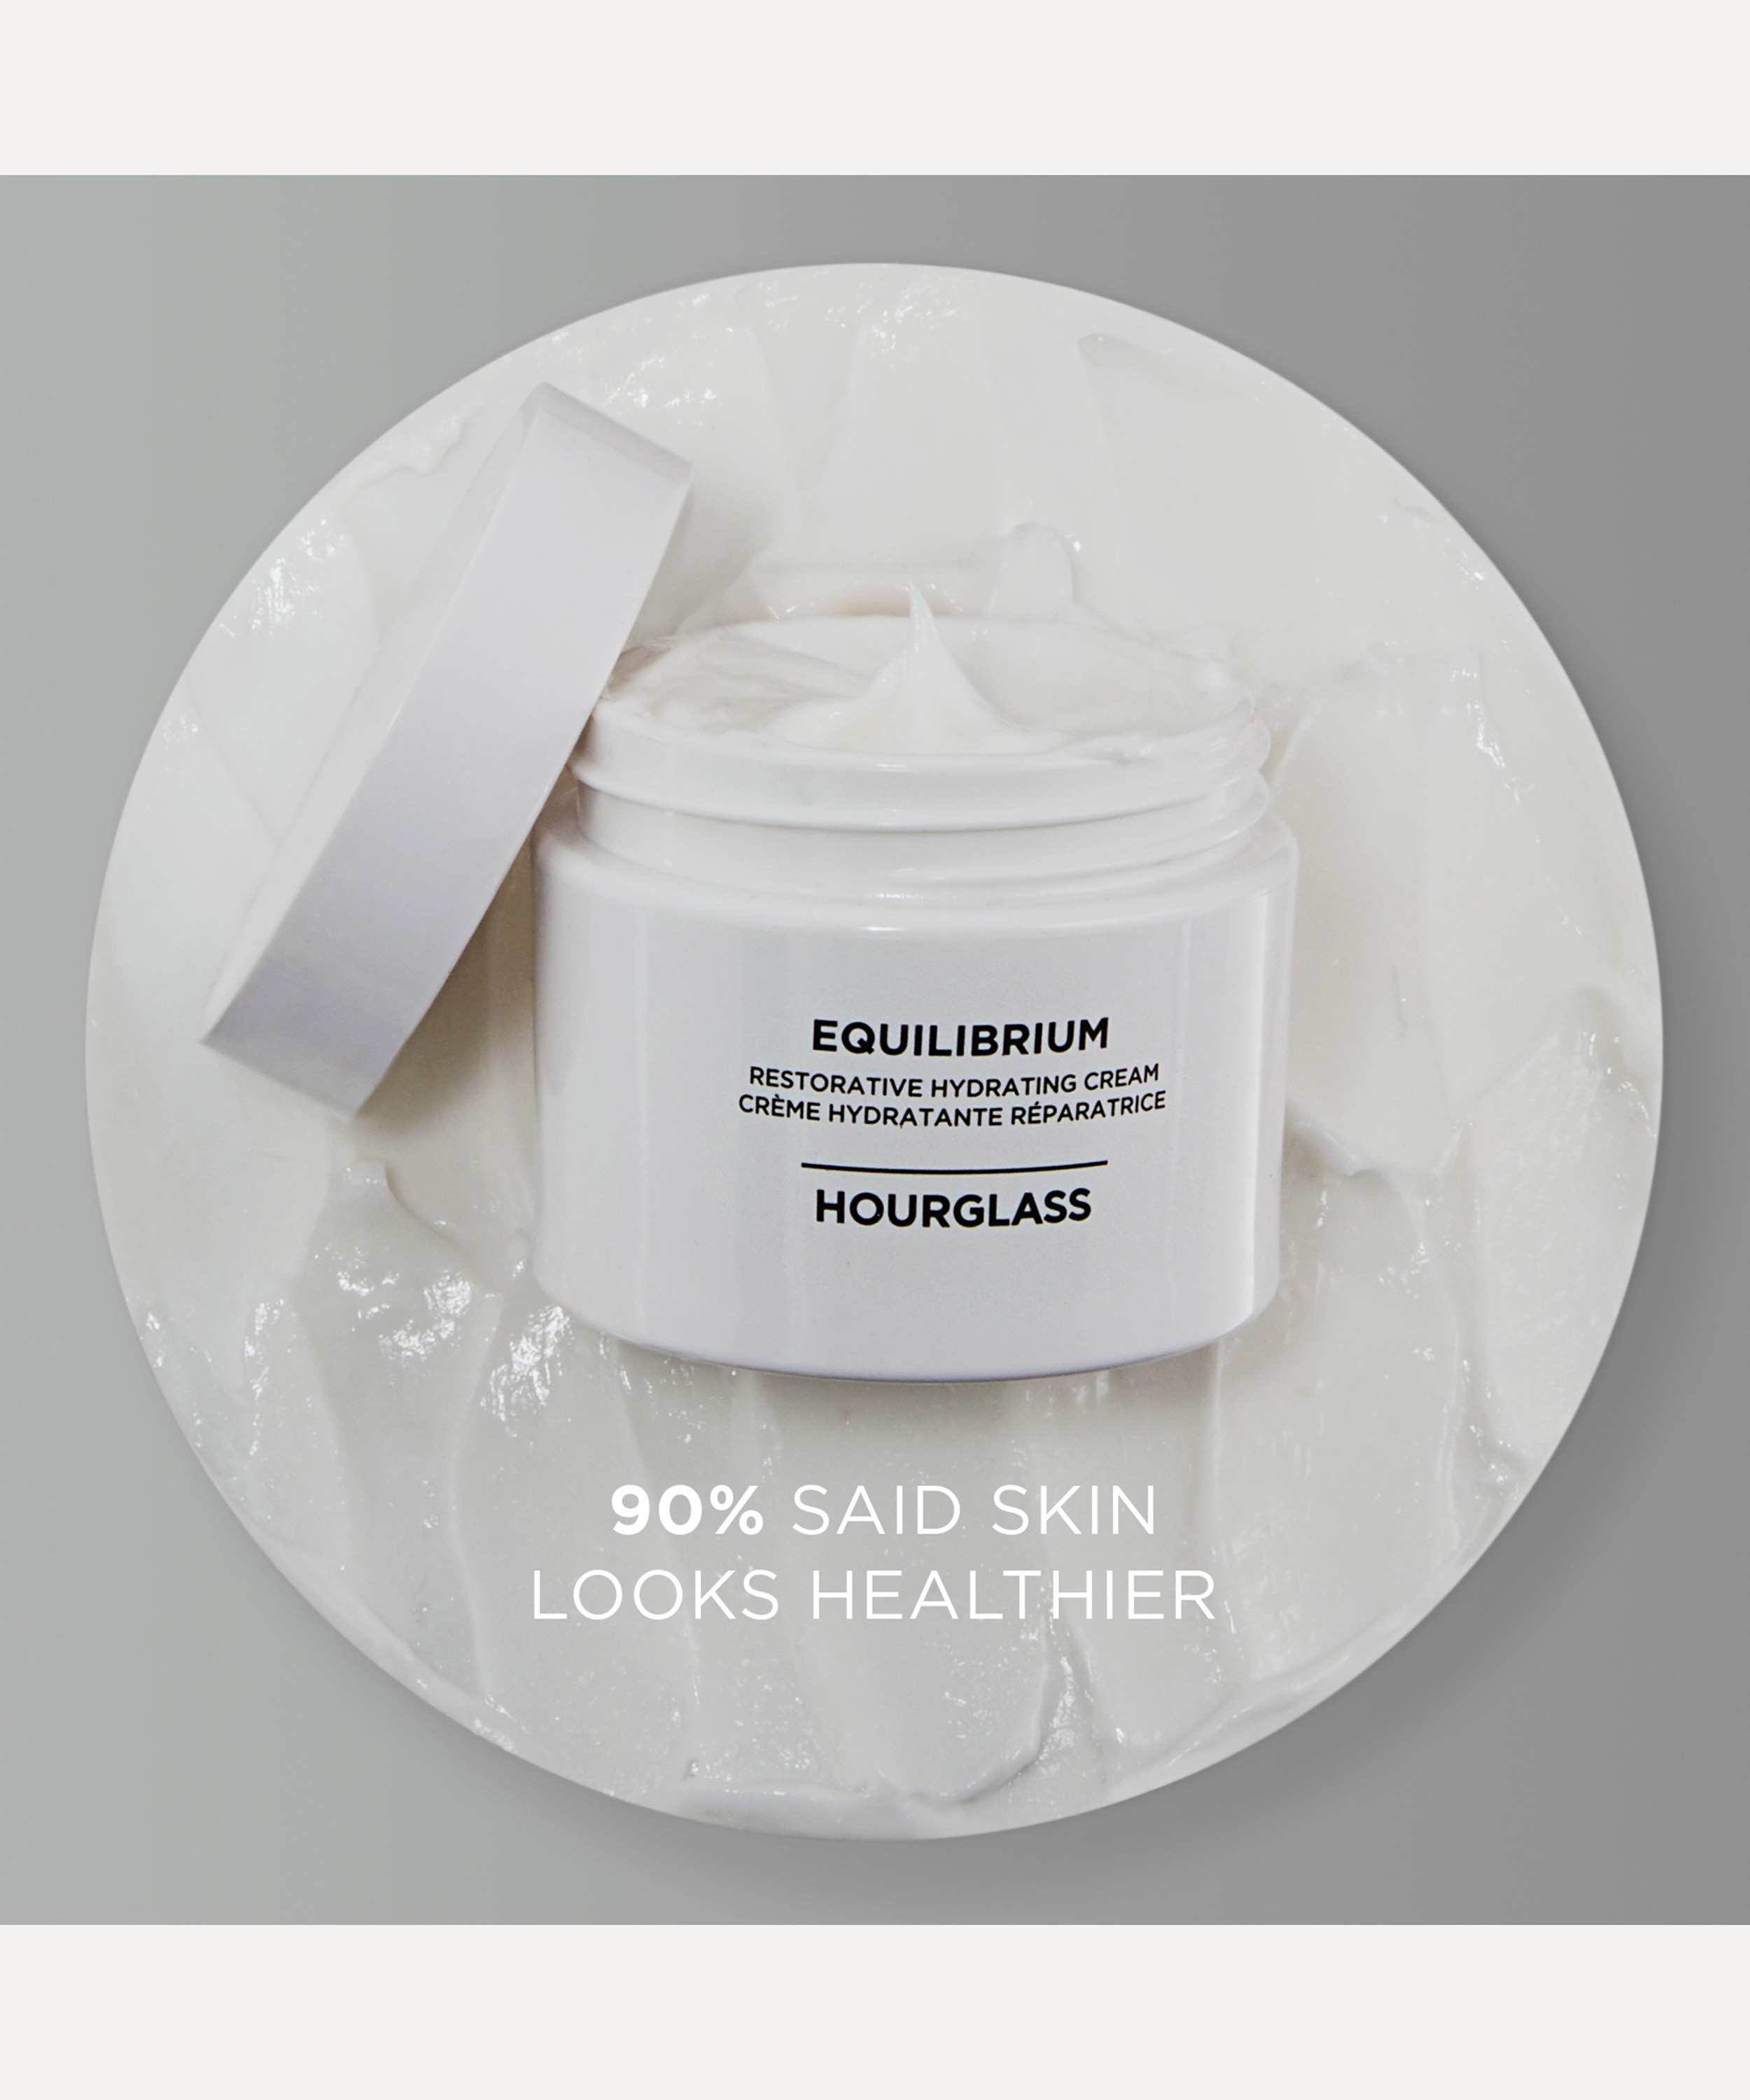 Hourglass - Equilibrium Restorative Hydrating Cream 53.8g image number 3